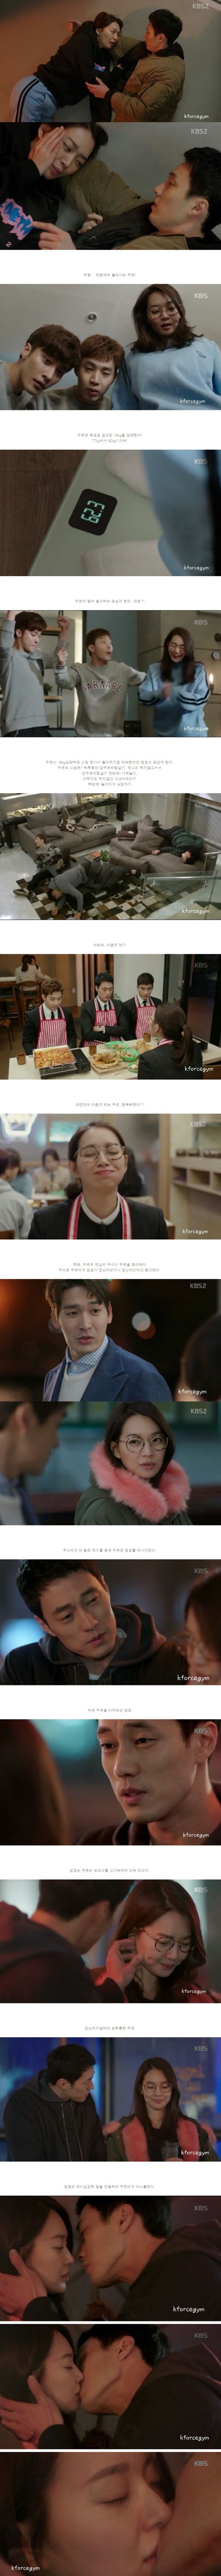 episode 6 captures for the Korean drama 'Oh My Venus'